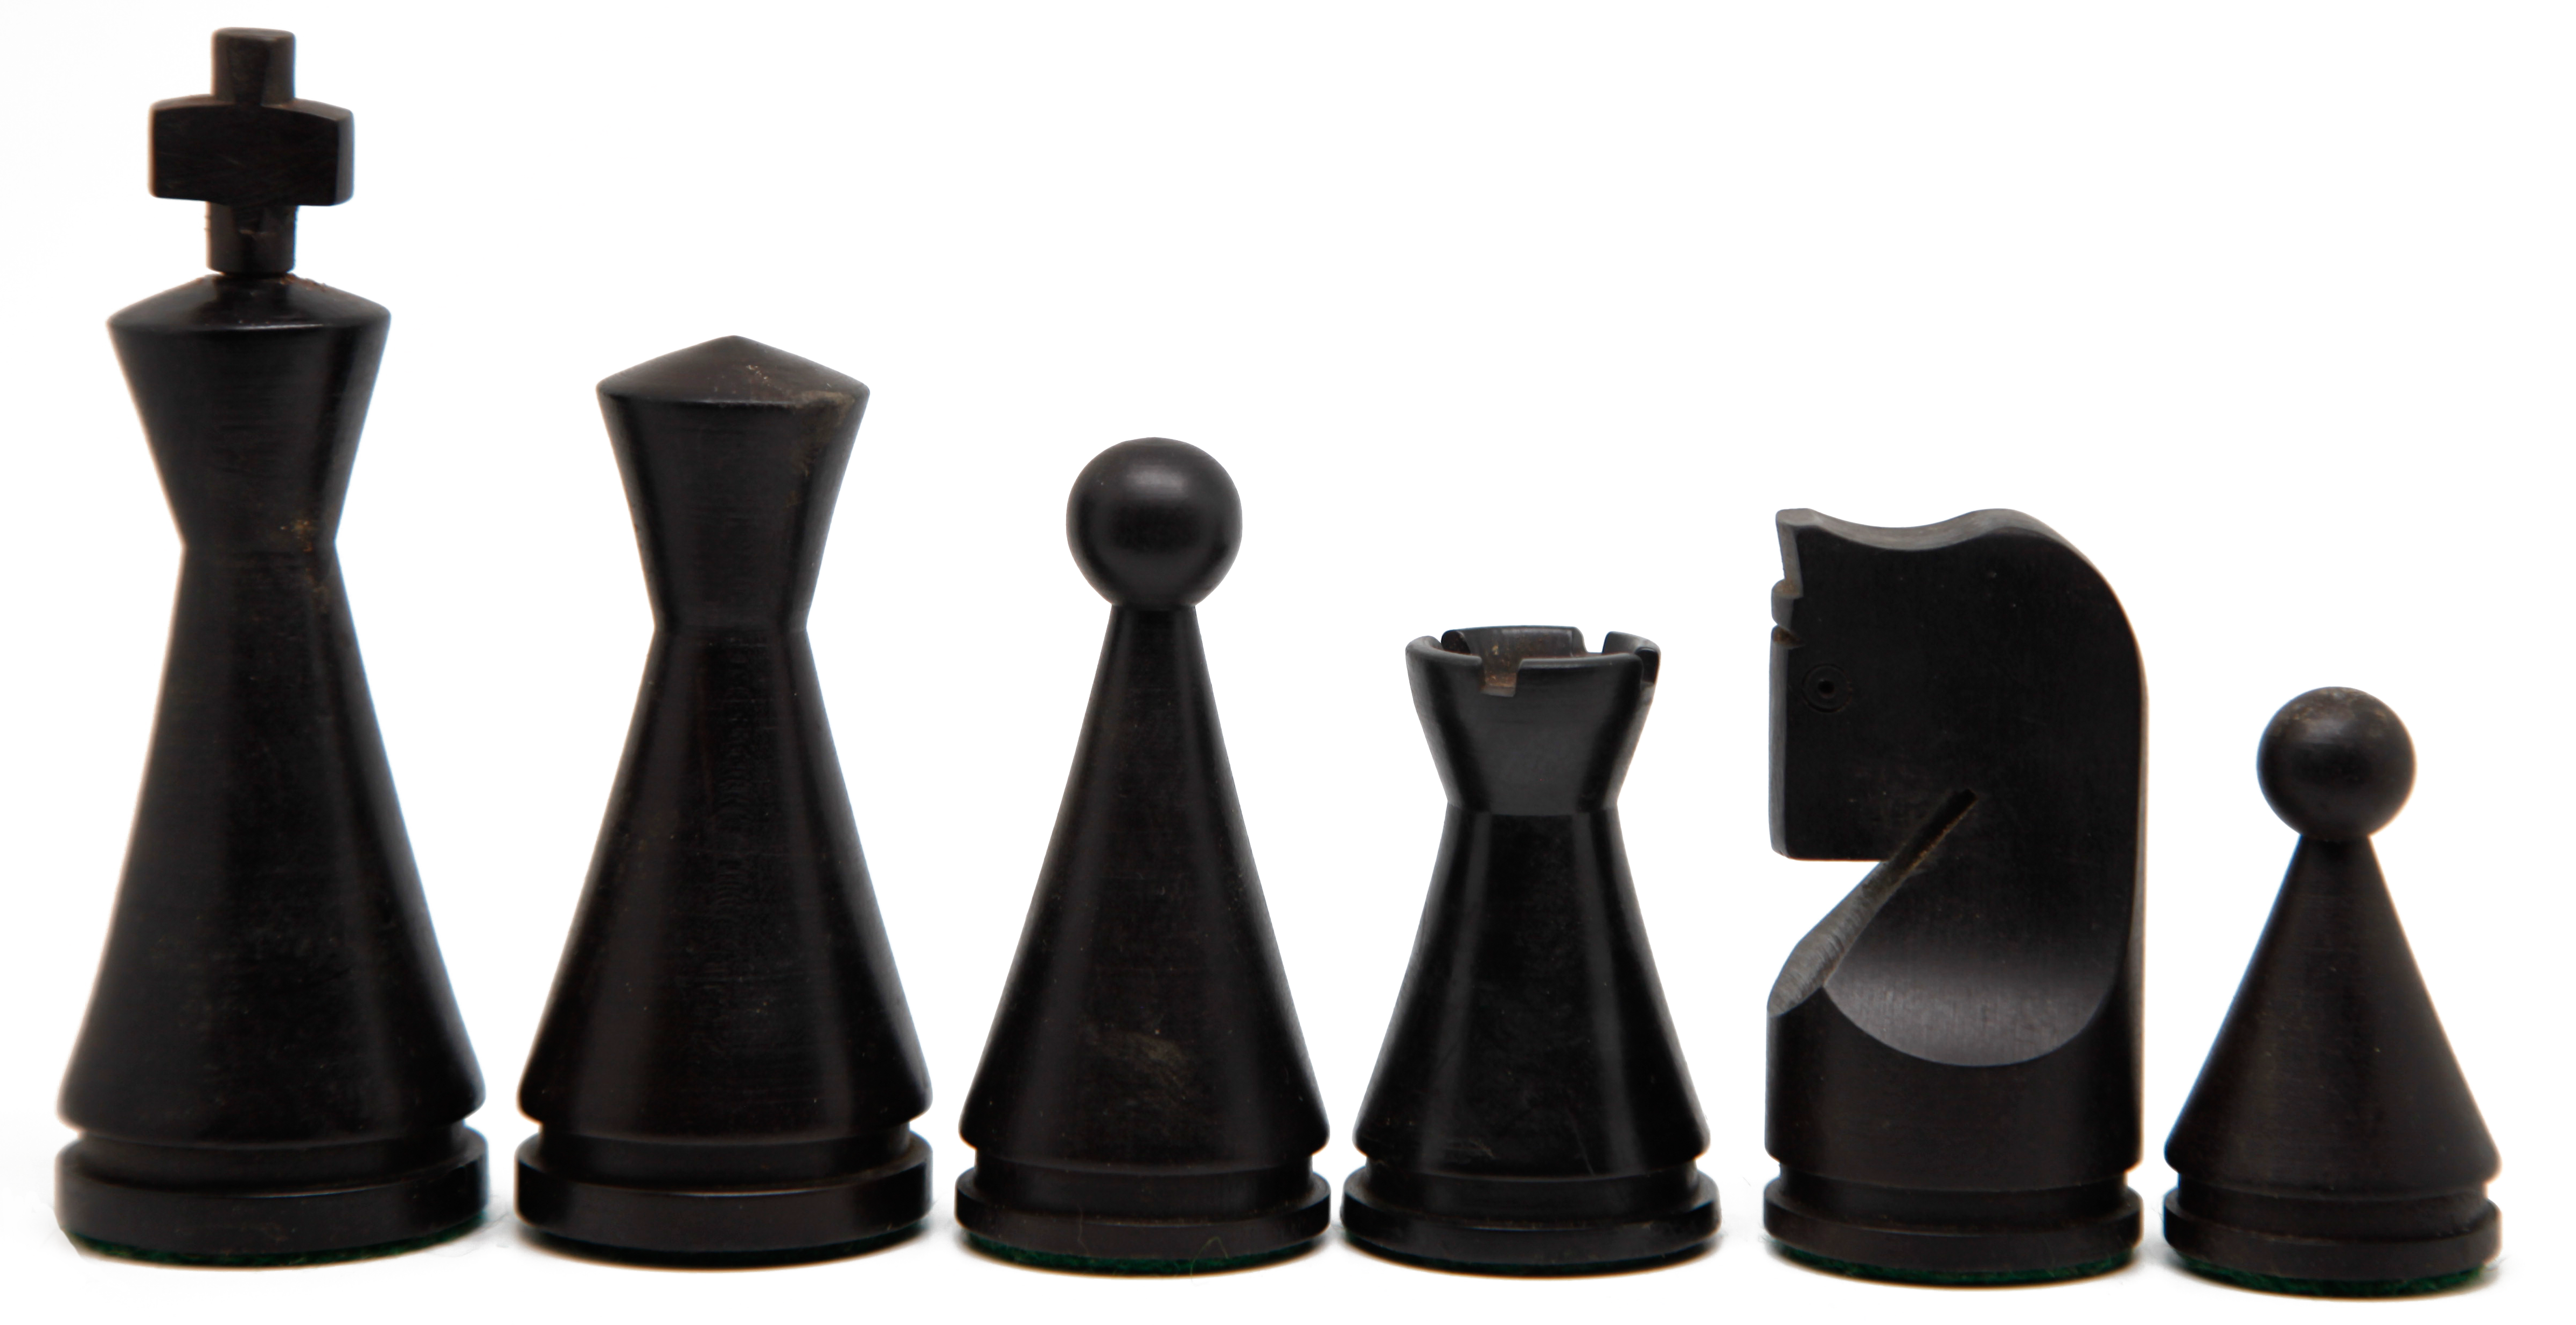 VI/ Piezas de ajedrez modelo Cone modernas "3.75" Ebanizado.